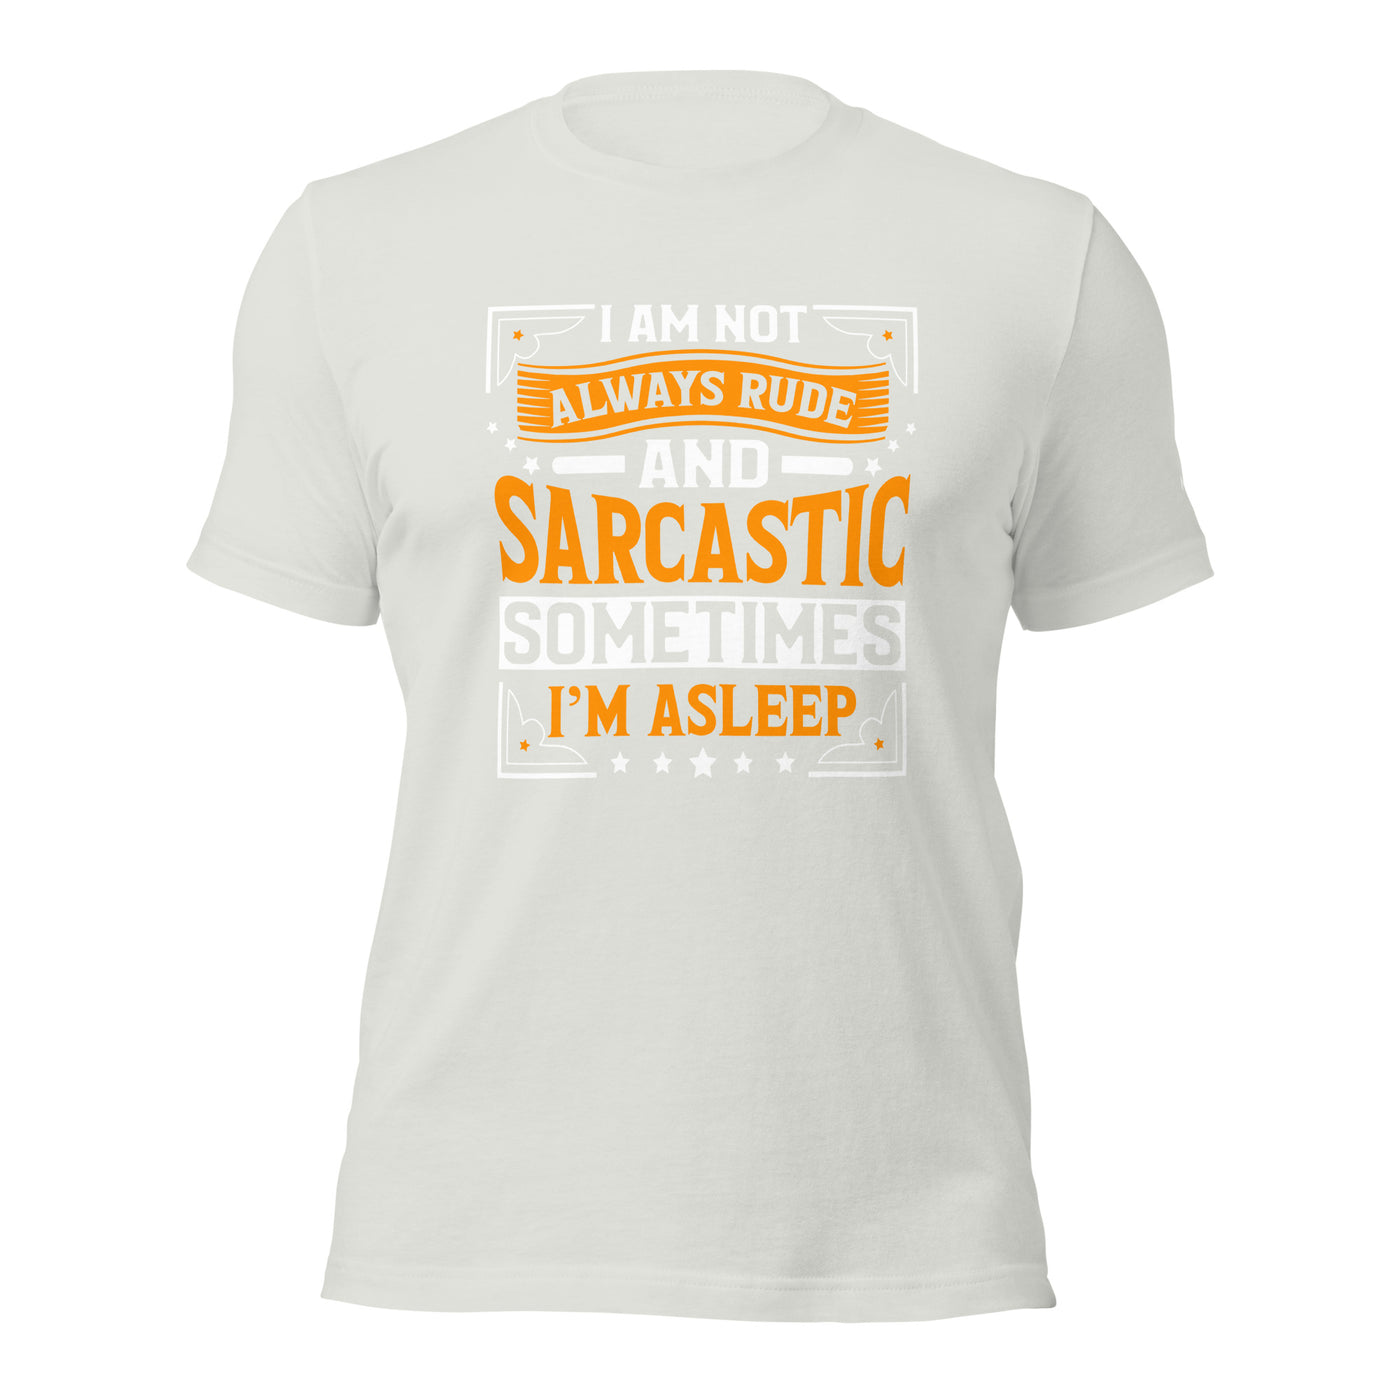 I am not always rude and sarcastic: Sometimes, I am asleep - Unisex t-shirt